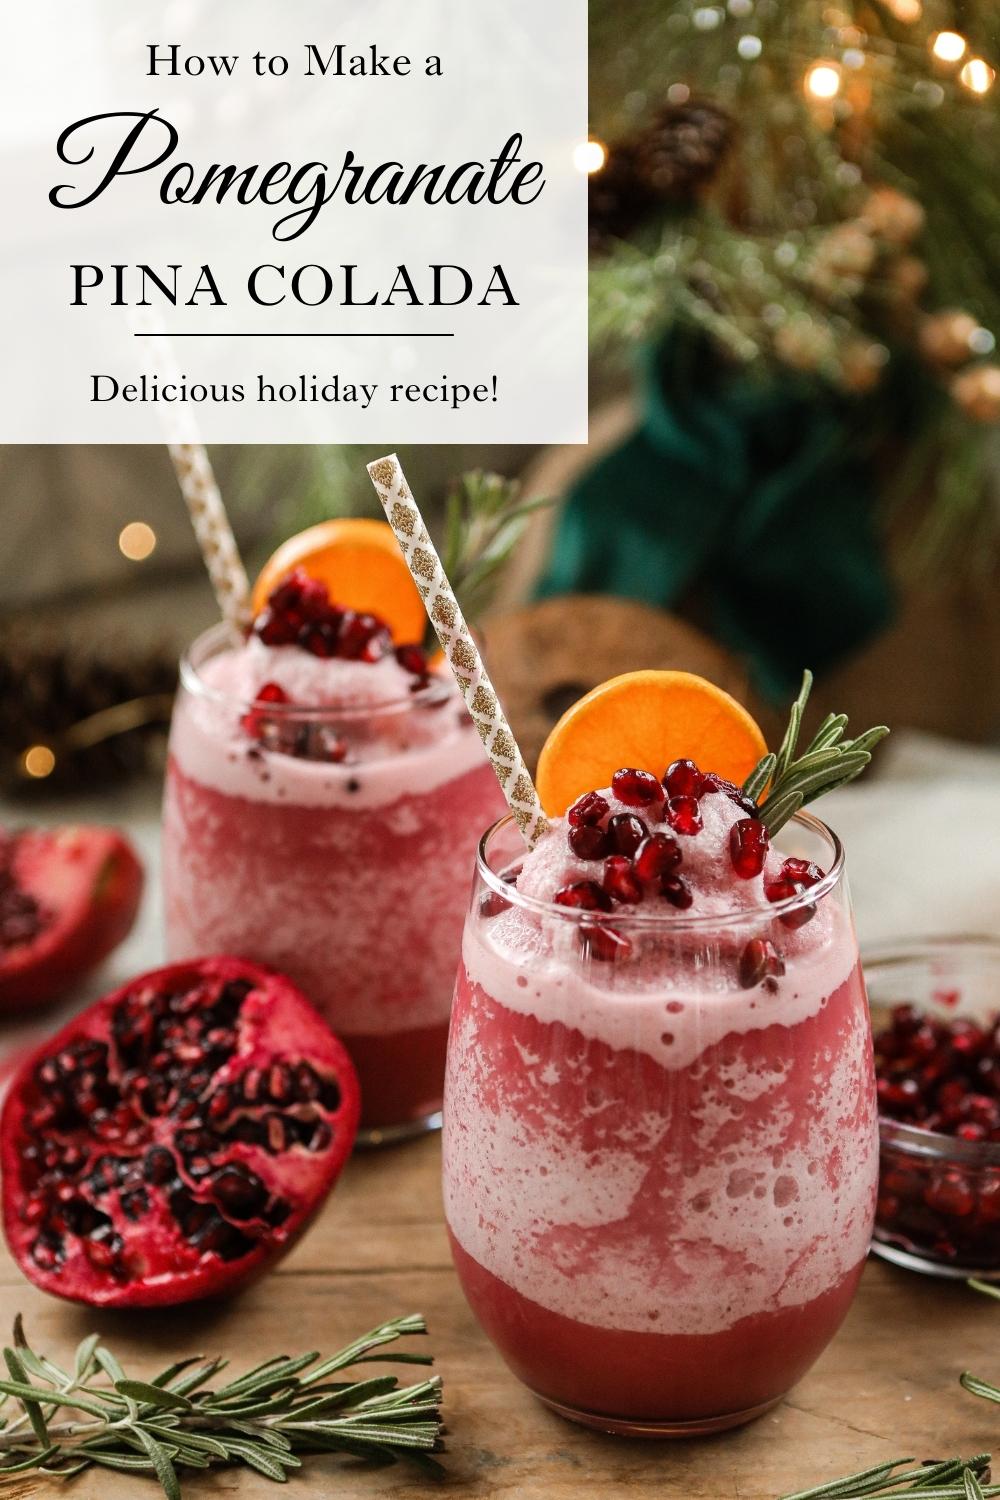 Pomegranate Pina Colada is a fun Christmas Pina Colada